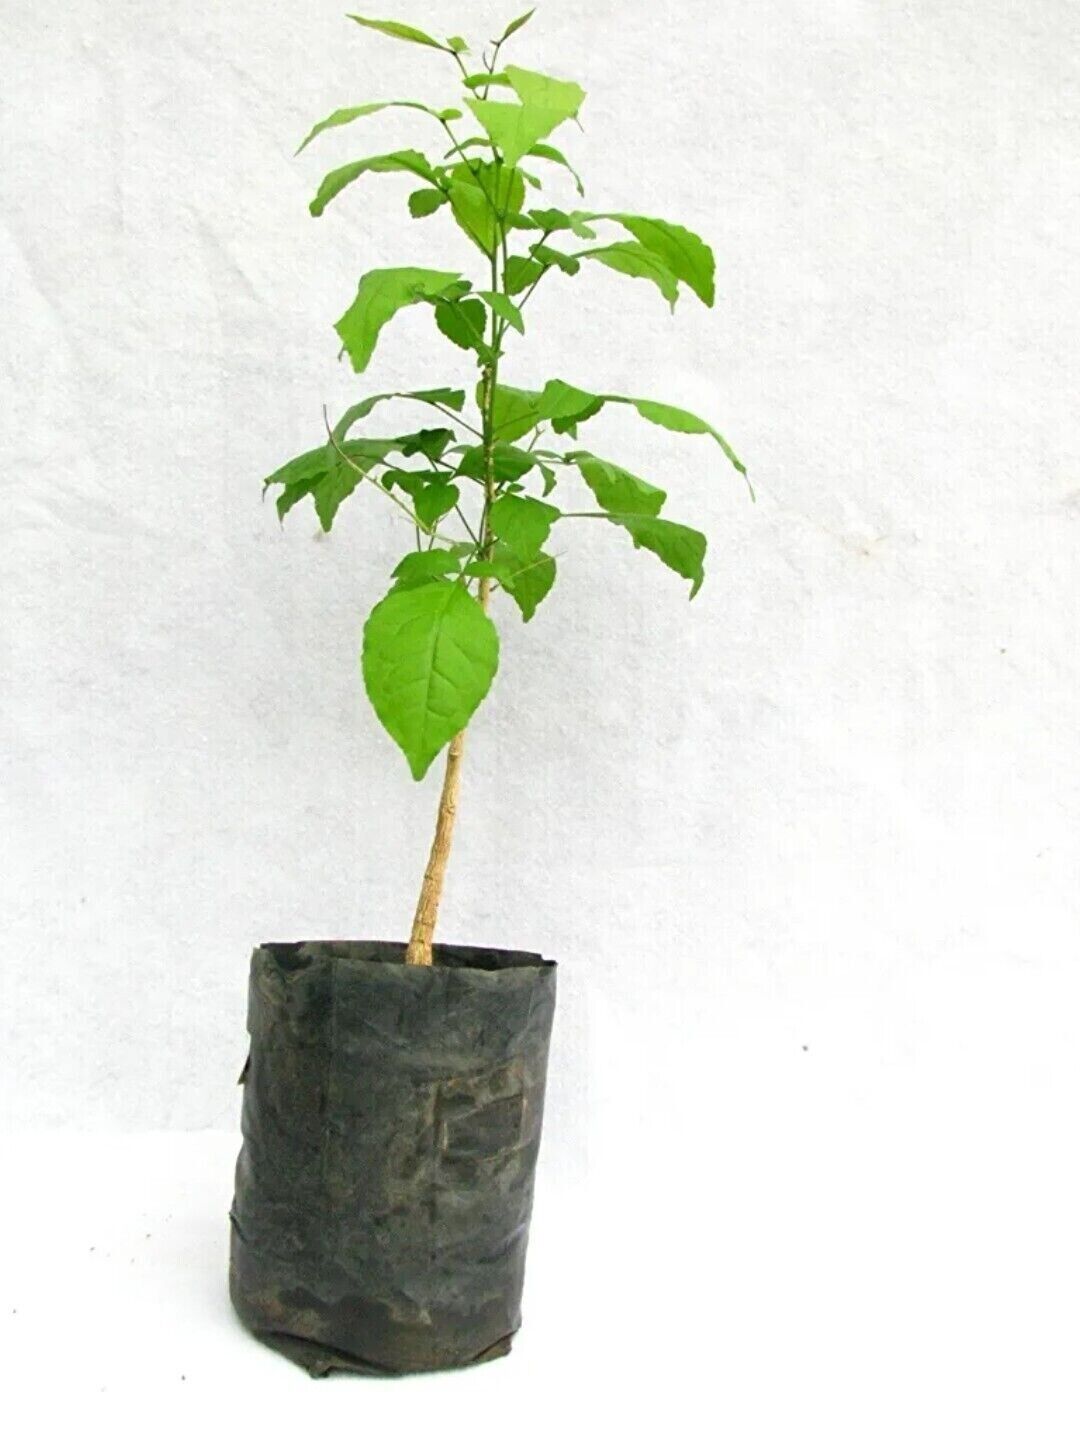 4 Bel Patra, Bilva Plant Live Plant Length 10 -15 inch for Planting Garden Plant